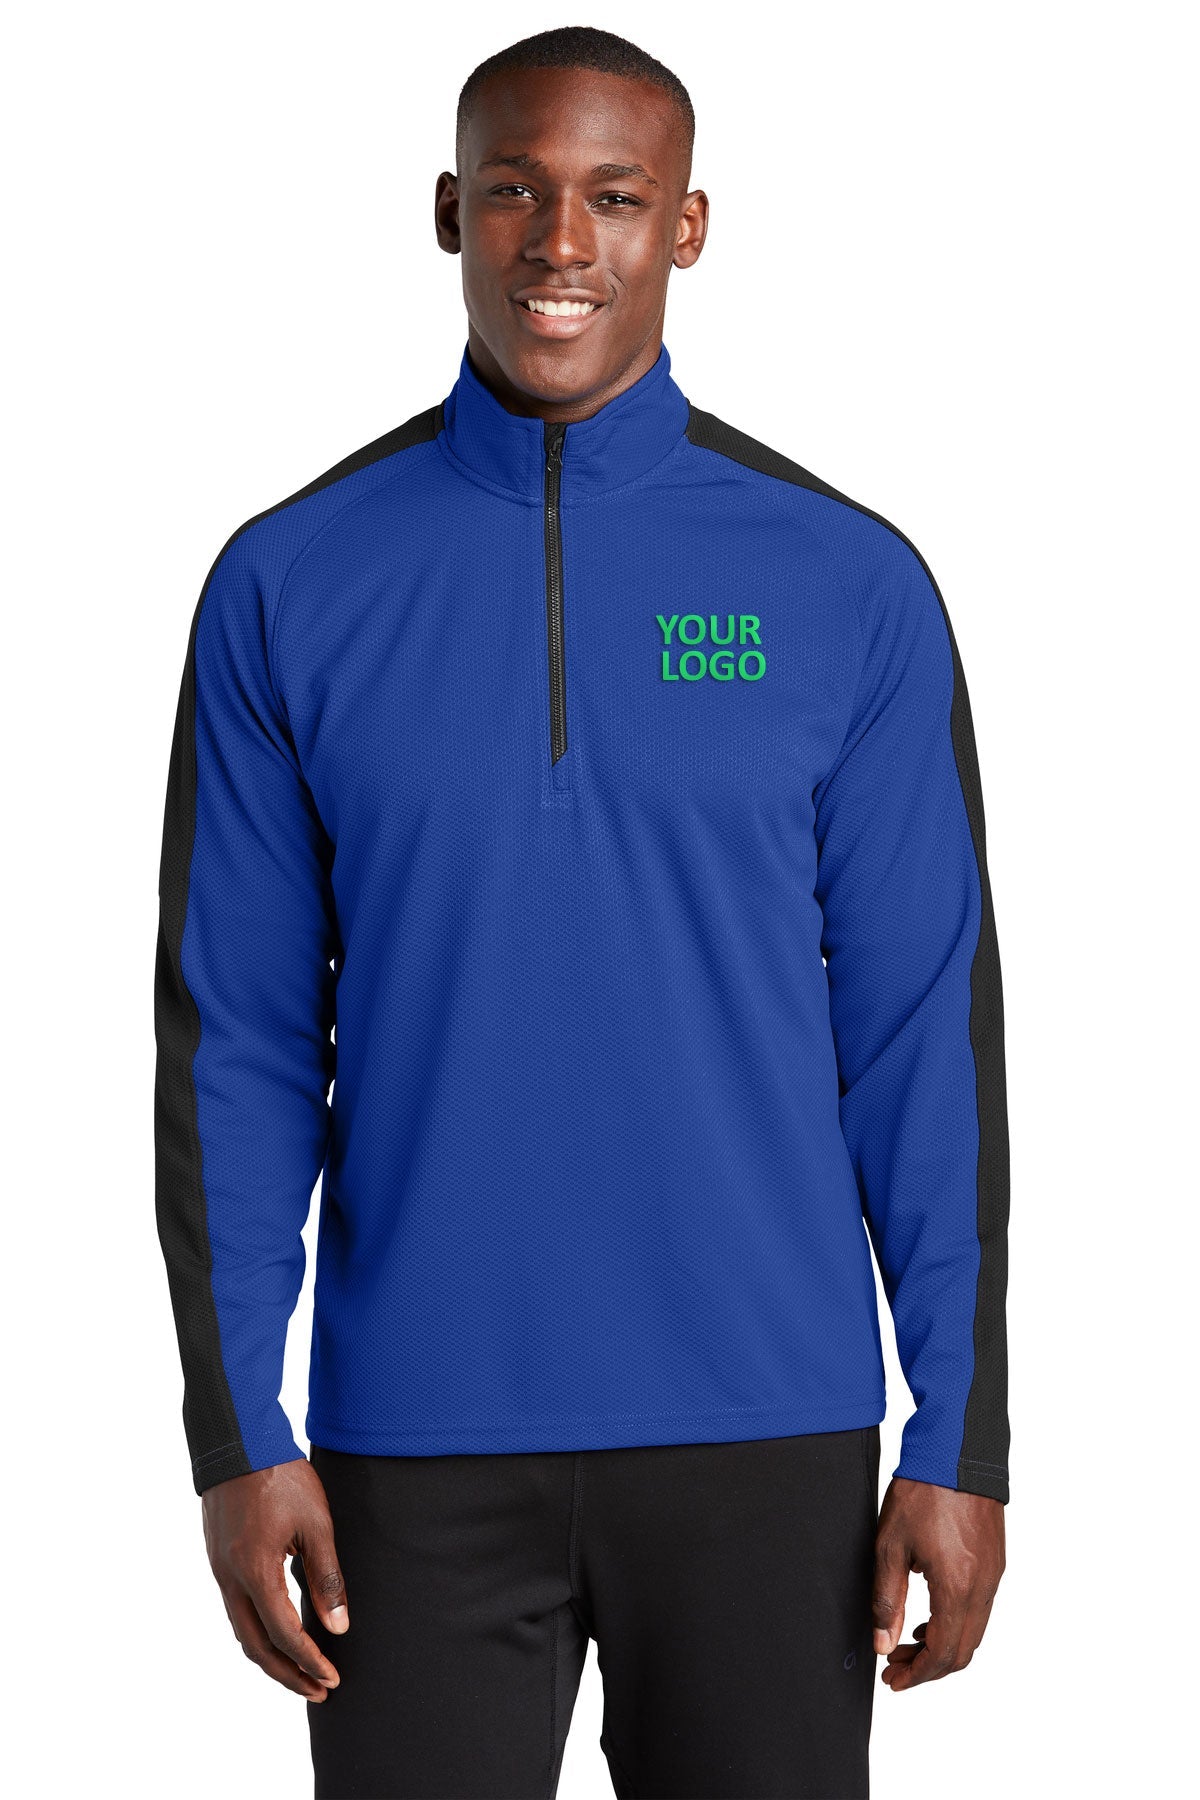 Sport-Tek True Royal/ Black ST861 sweatshirts with logo printed